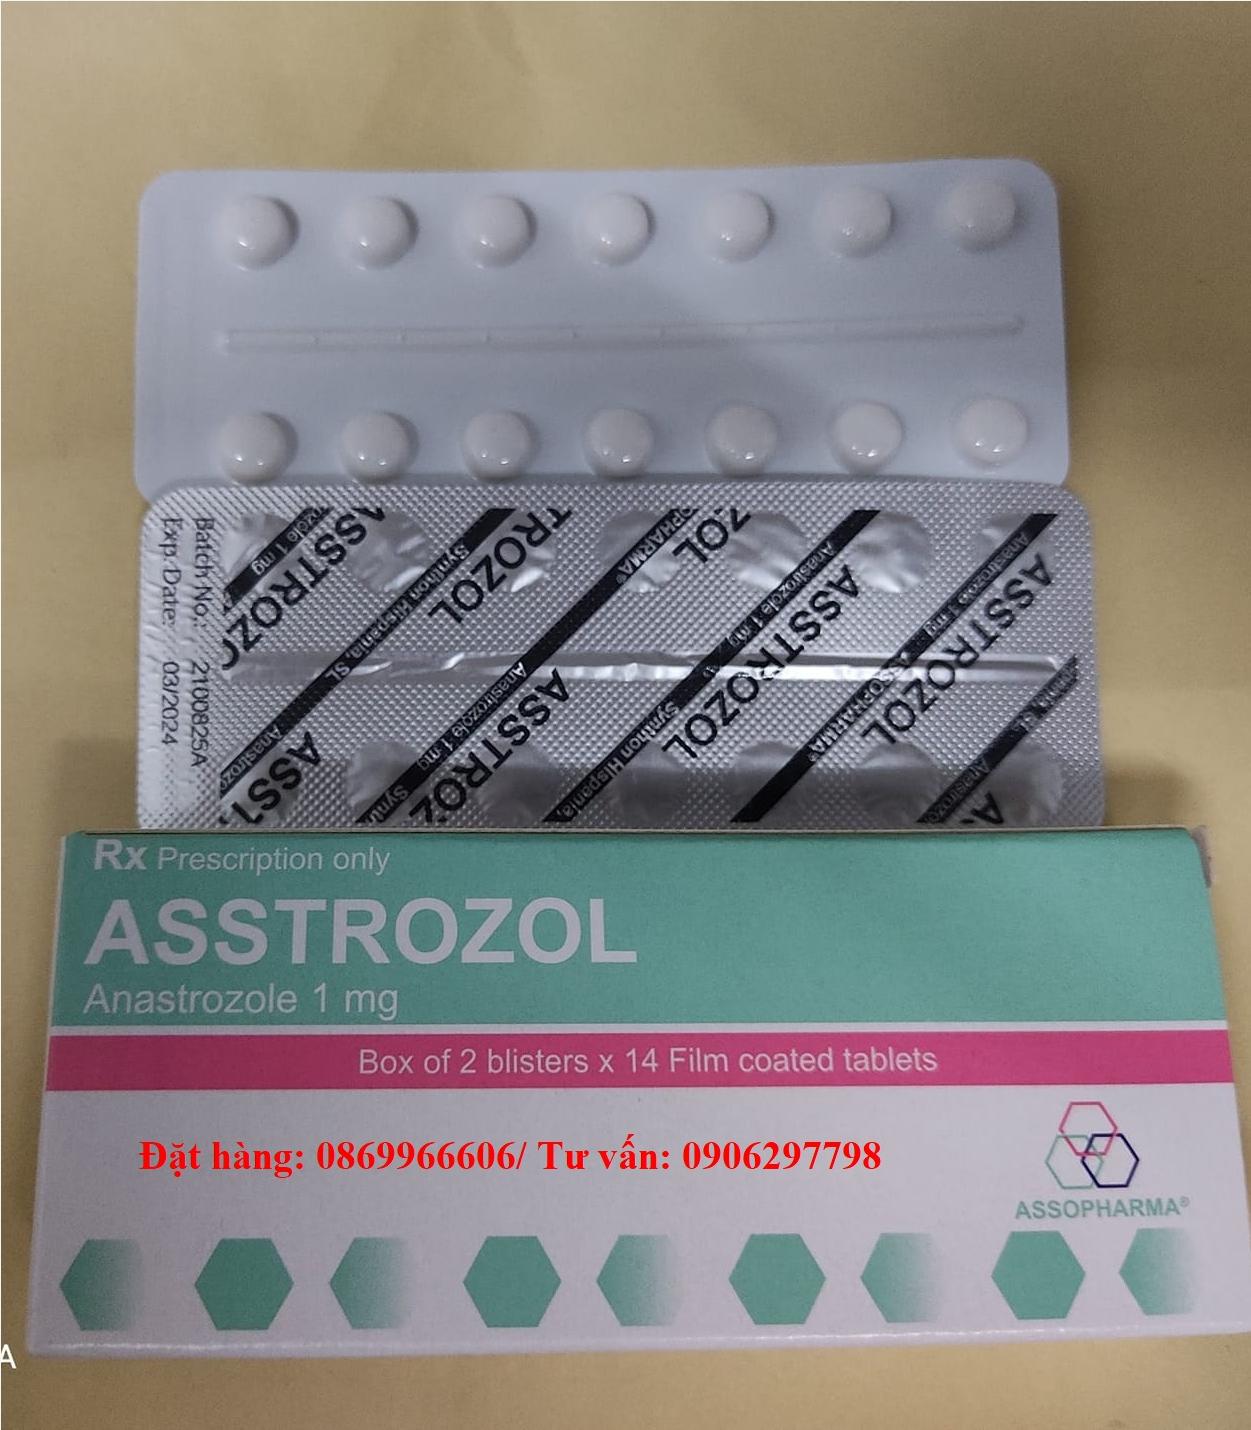 Thuốc Asstrozol 1mg Anastrozole giá bao nhiêu mua ở đâu?